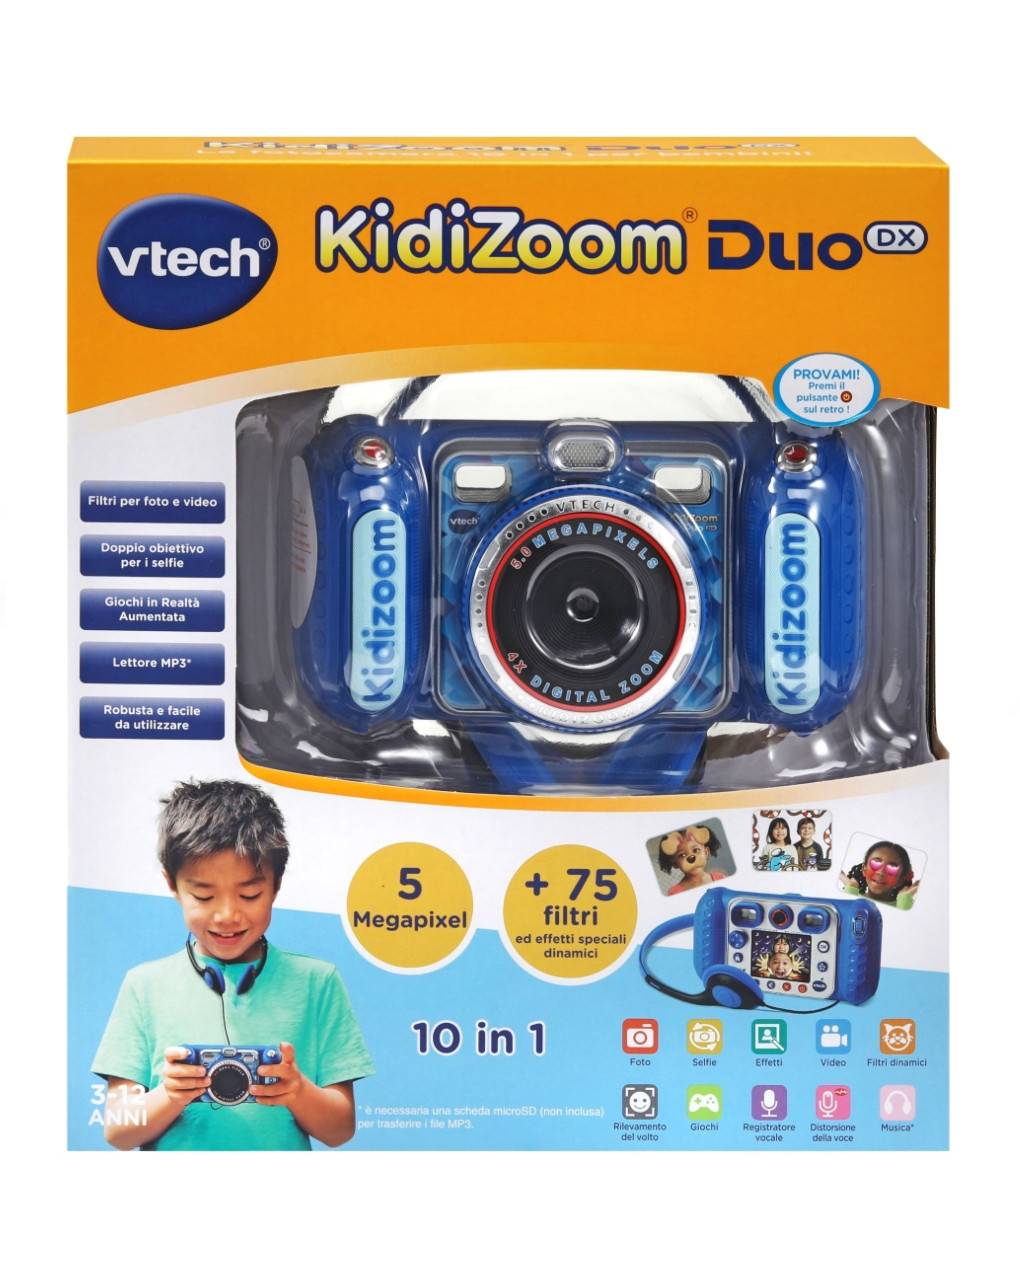 Kidizoom ® duo dx blu 3-12 anni - vtech - VTECH